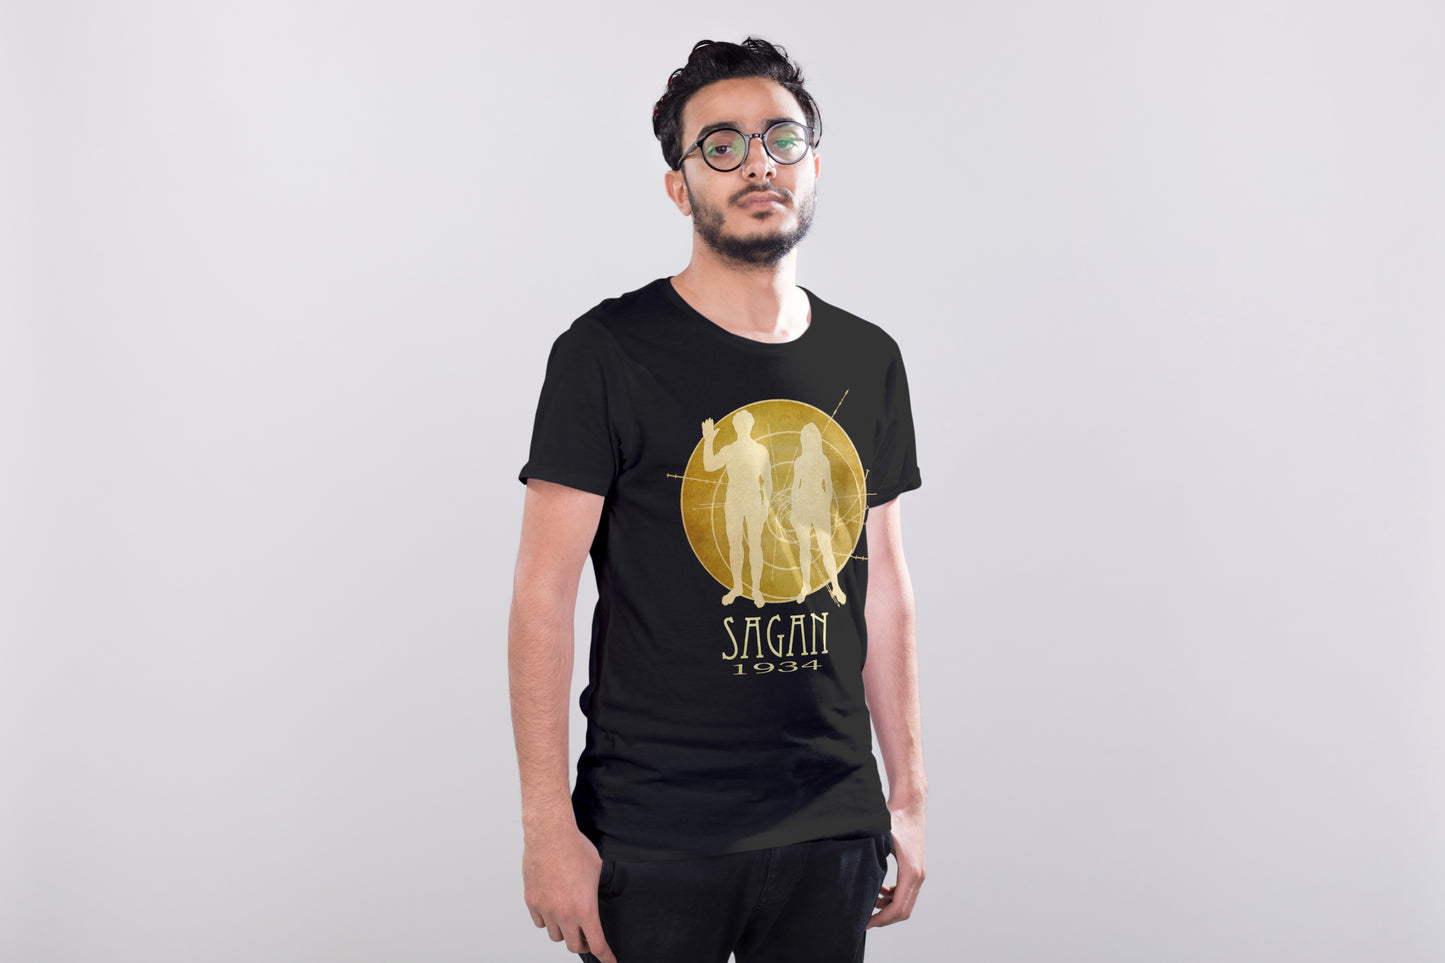 Sagan Astronomy T-shirt, NASA Space Exploration Graphic Tee